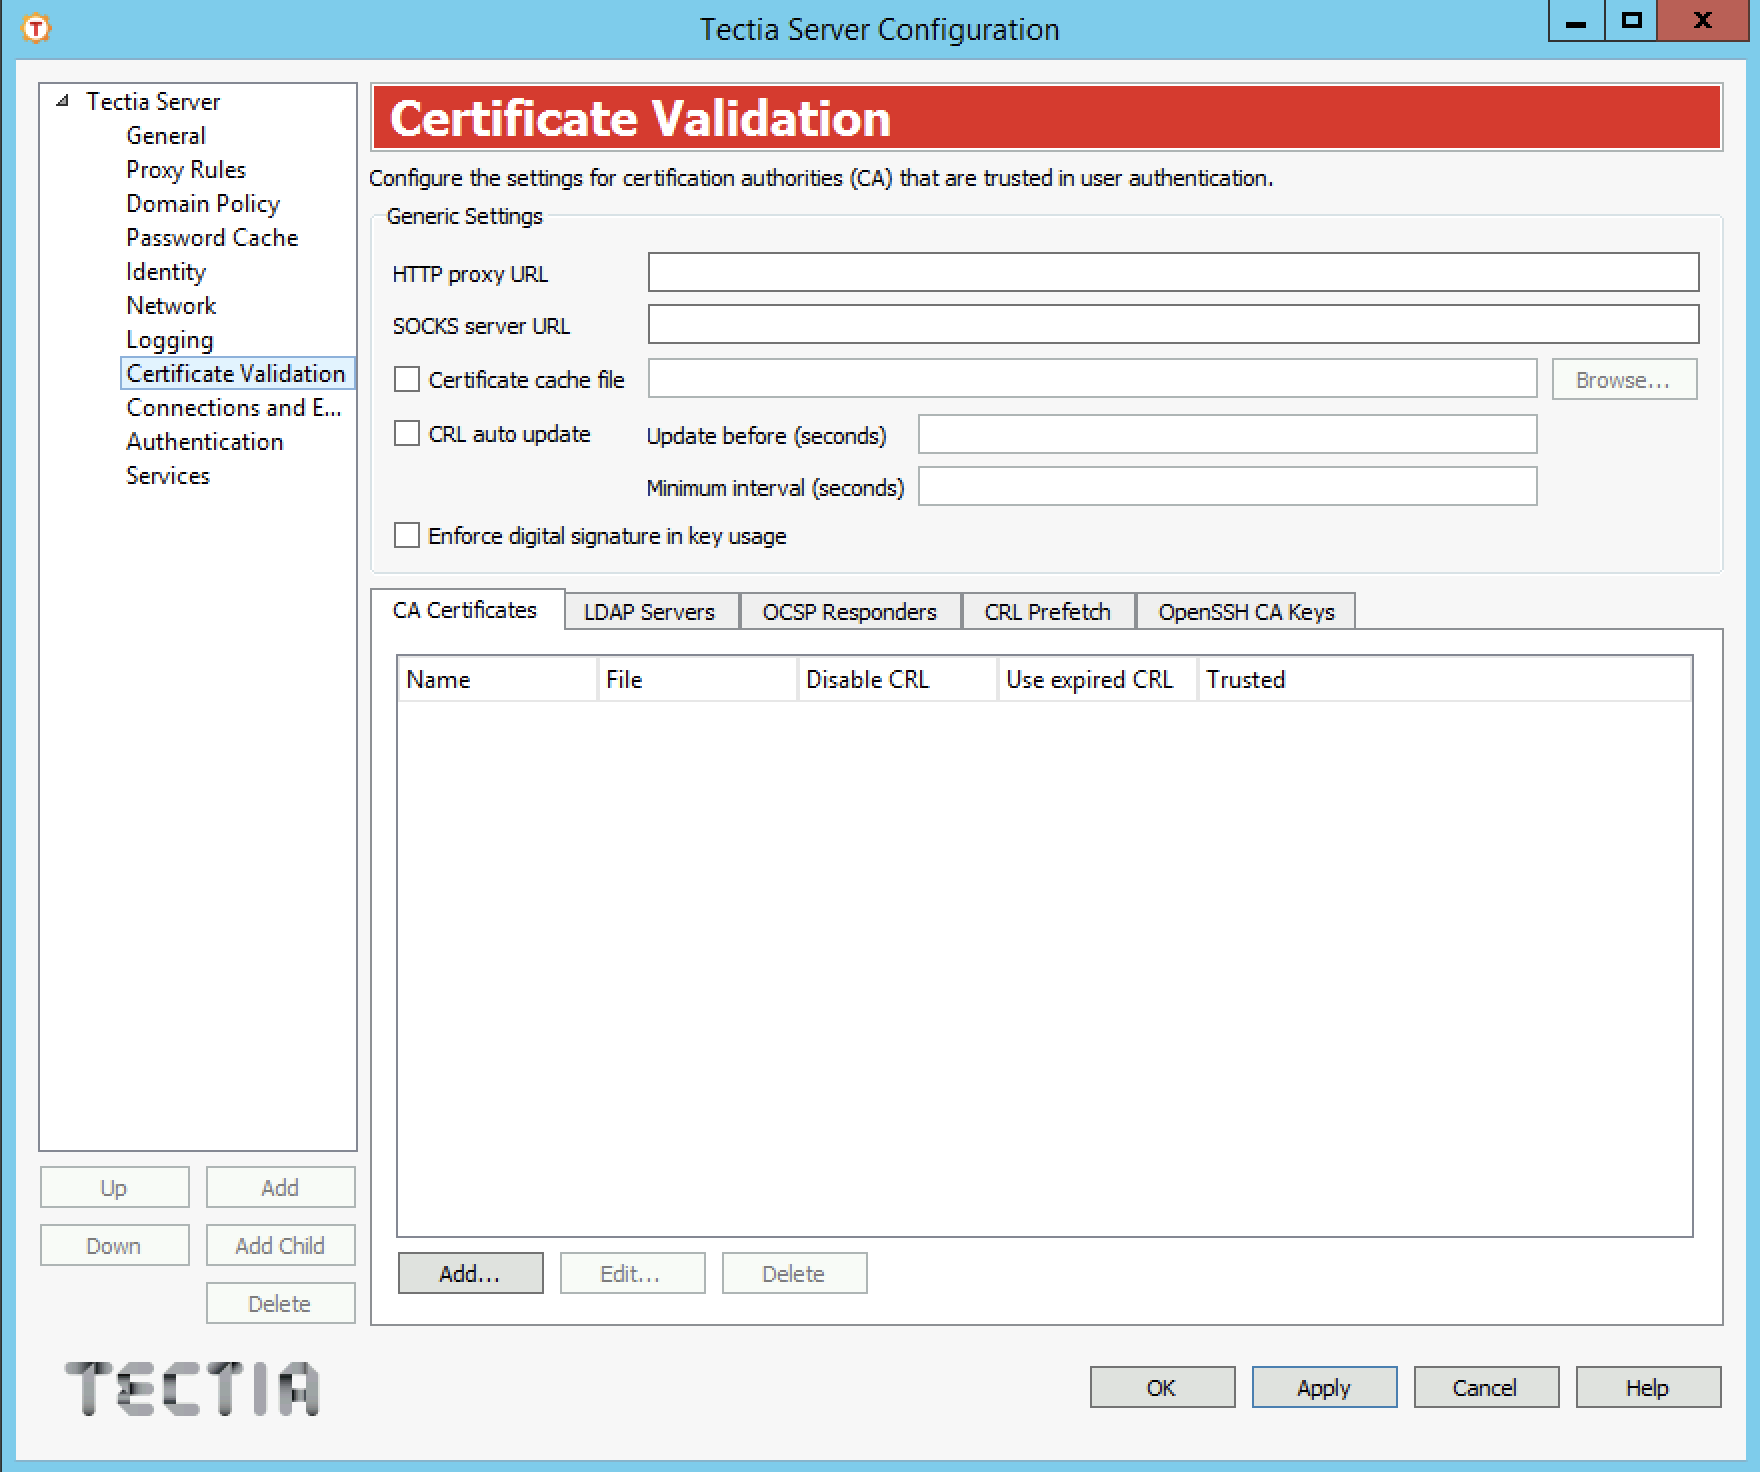 Tectia Server Configuration - Certificate Validation page